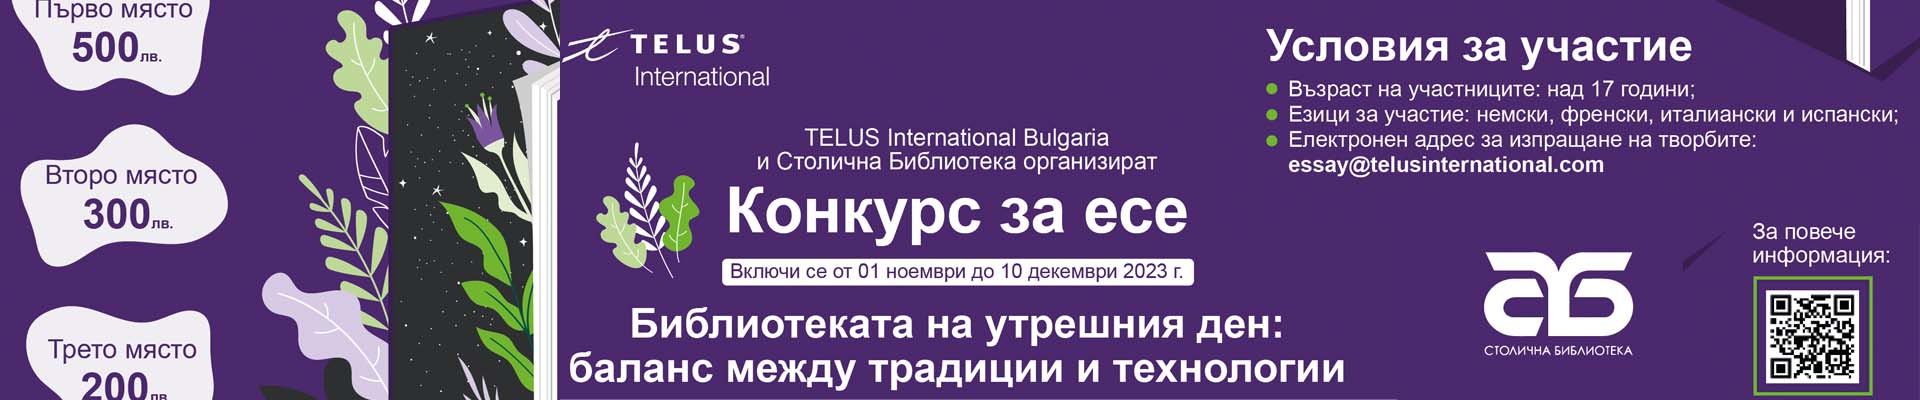 Конкурс за есе на Столична библиотека и TELUS International Bulgaria